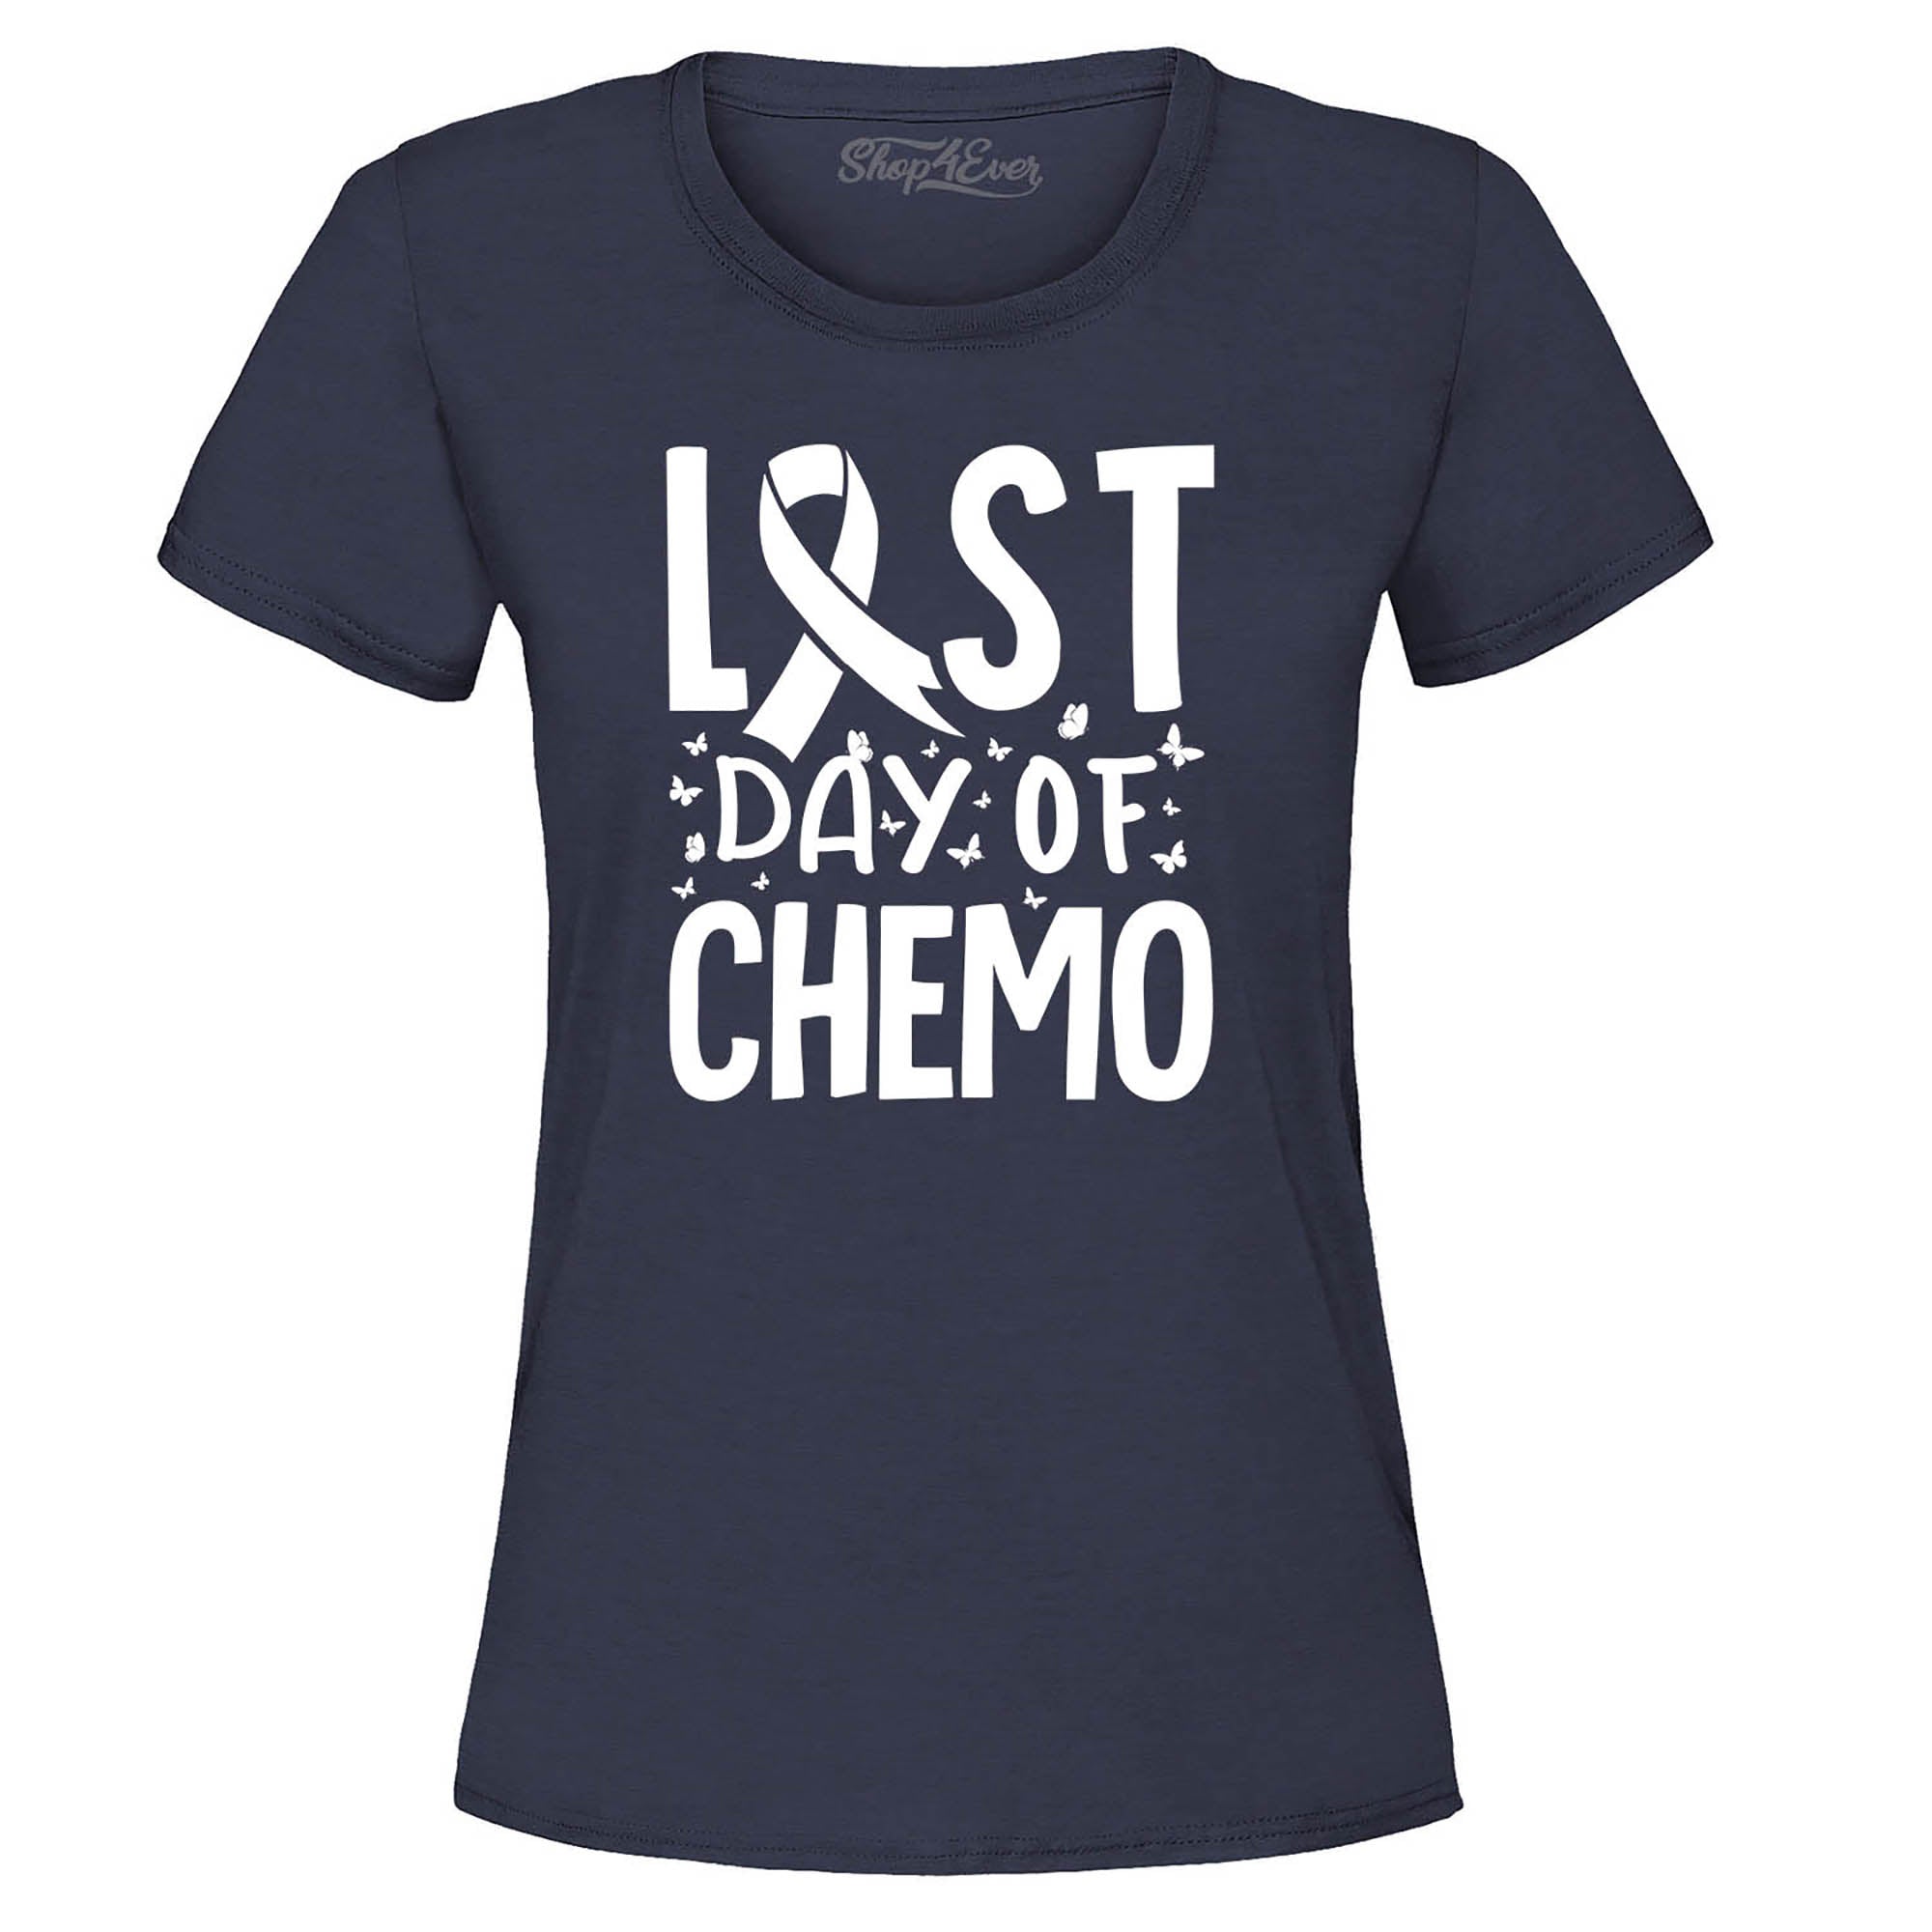 Last Day of Chemo Celebrate Cancer Survivor Women's T-Shirt